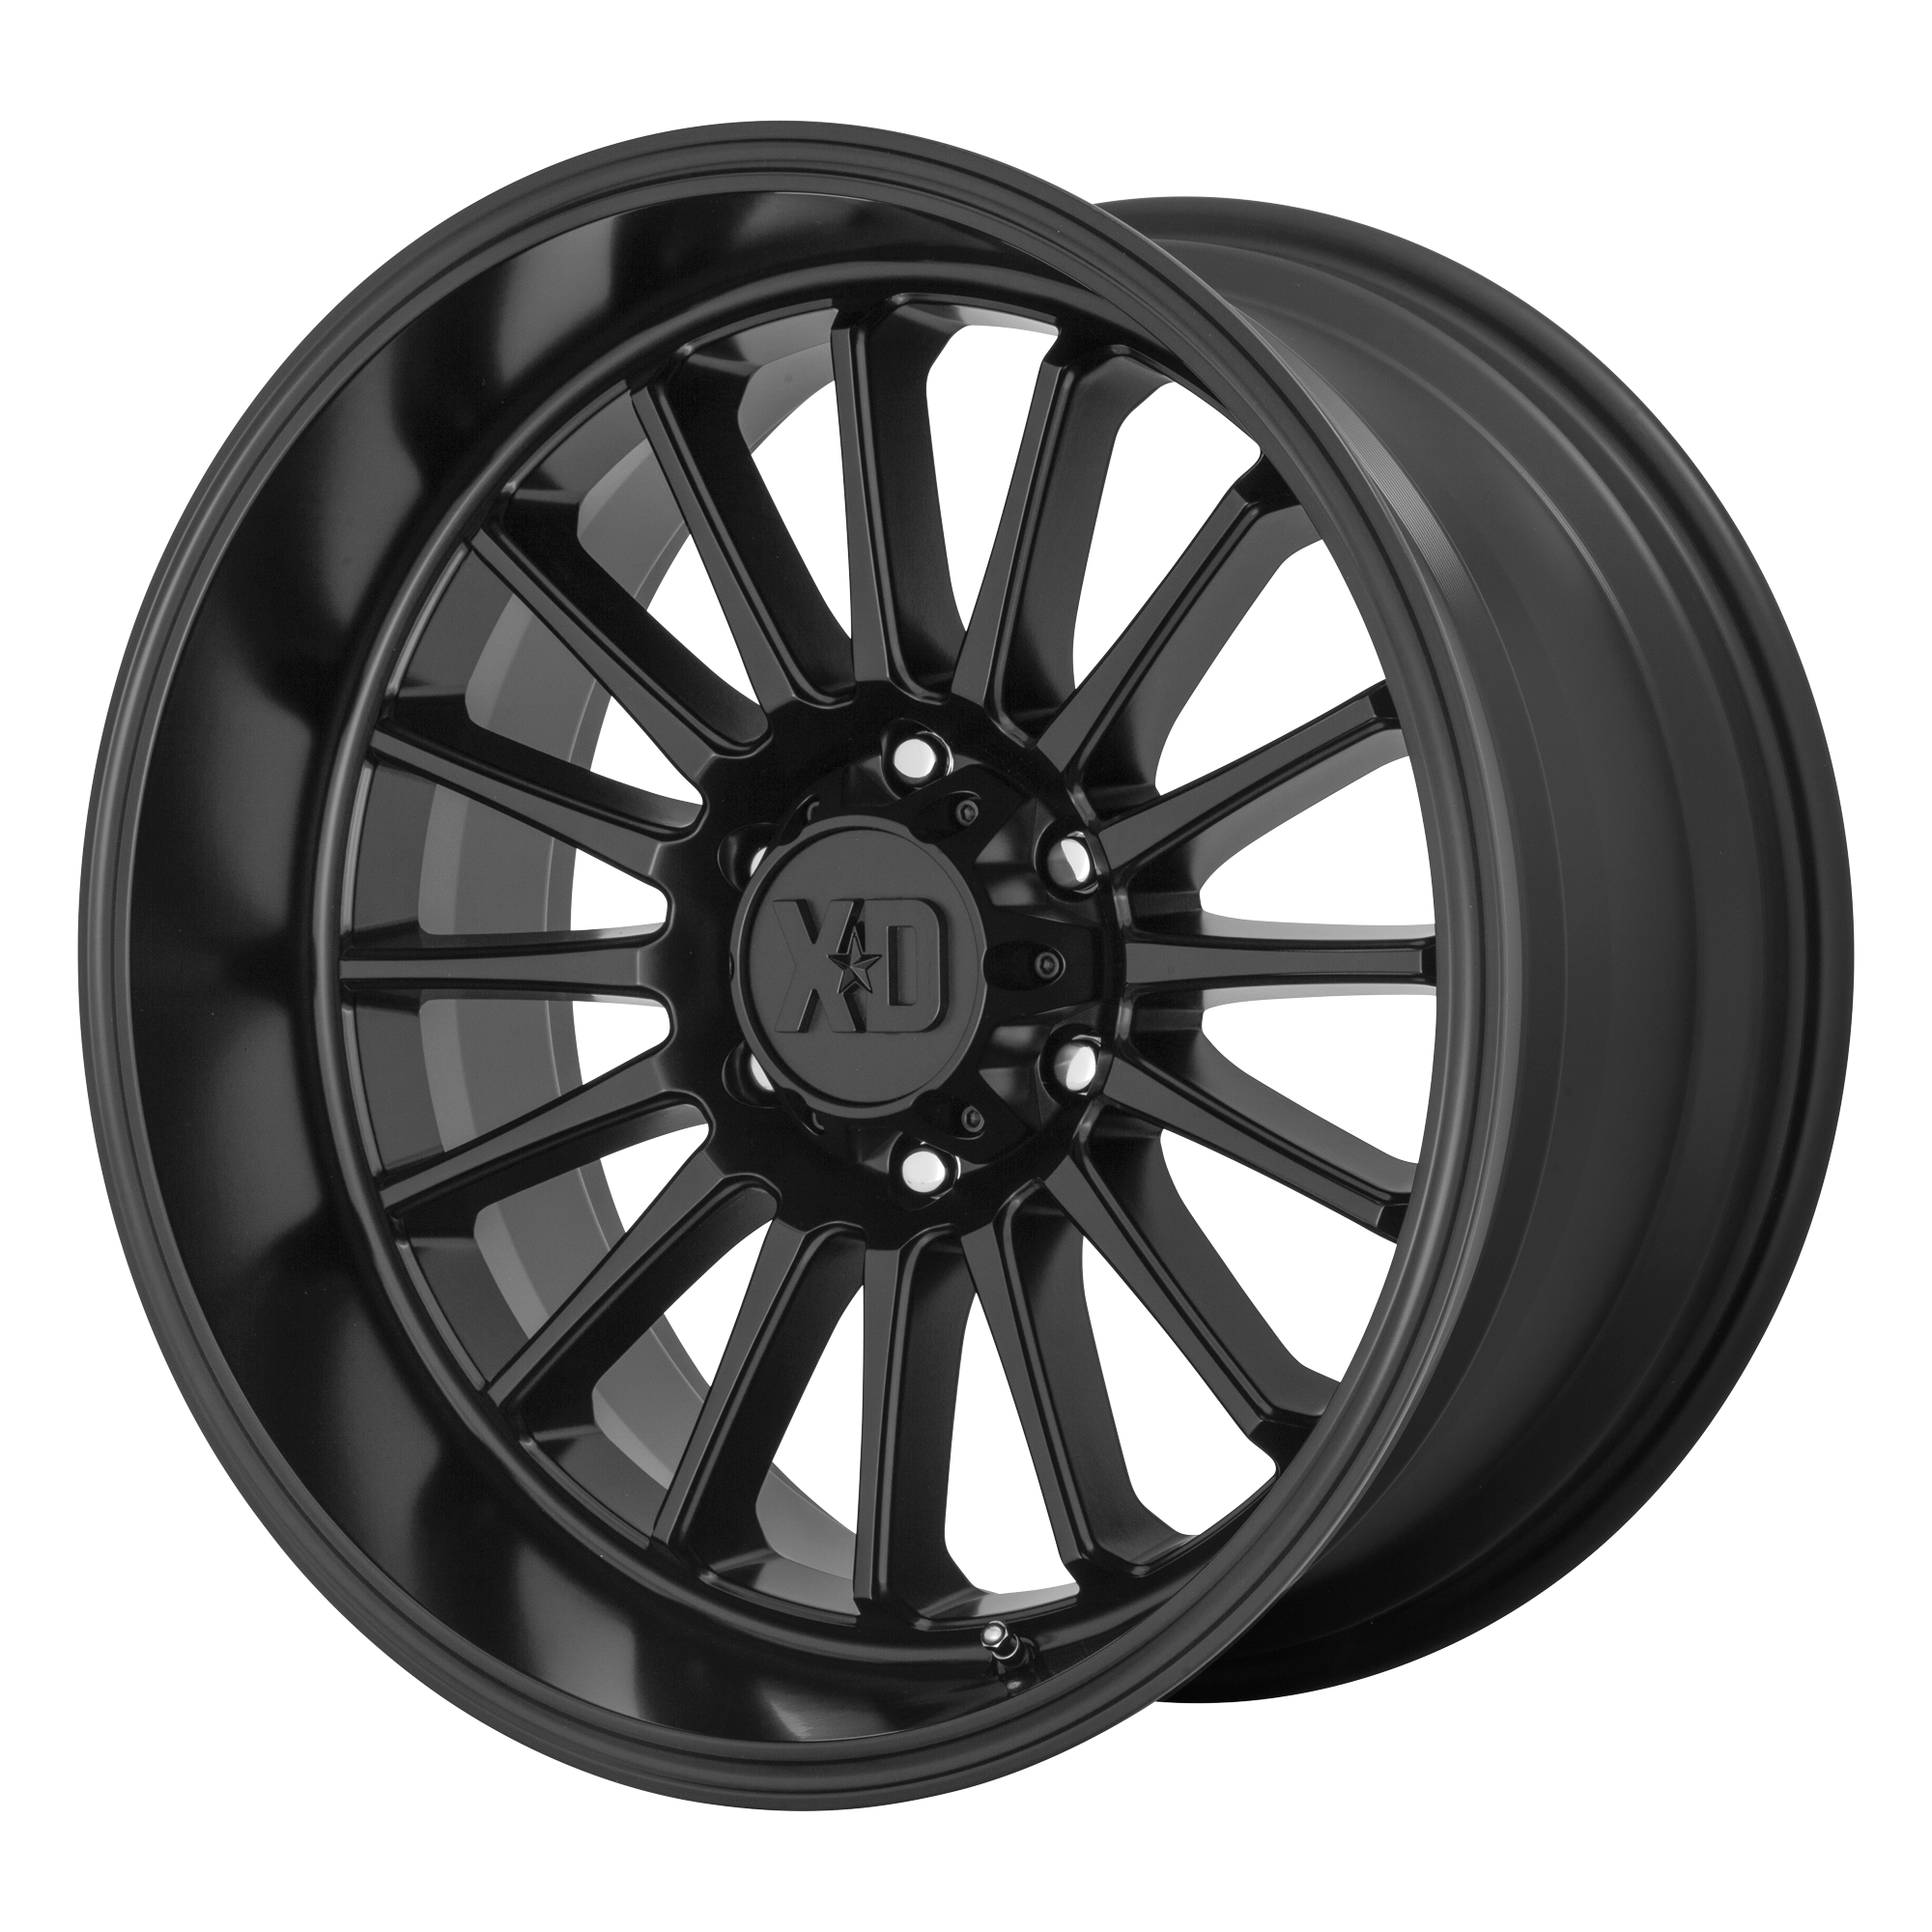 XD 20"x10" Non-Chrome Satin Black Custom Wheel ARSWCWXD85721050718N